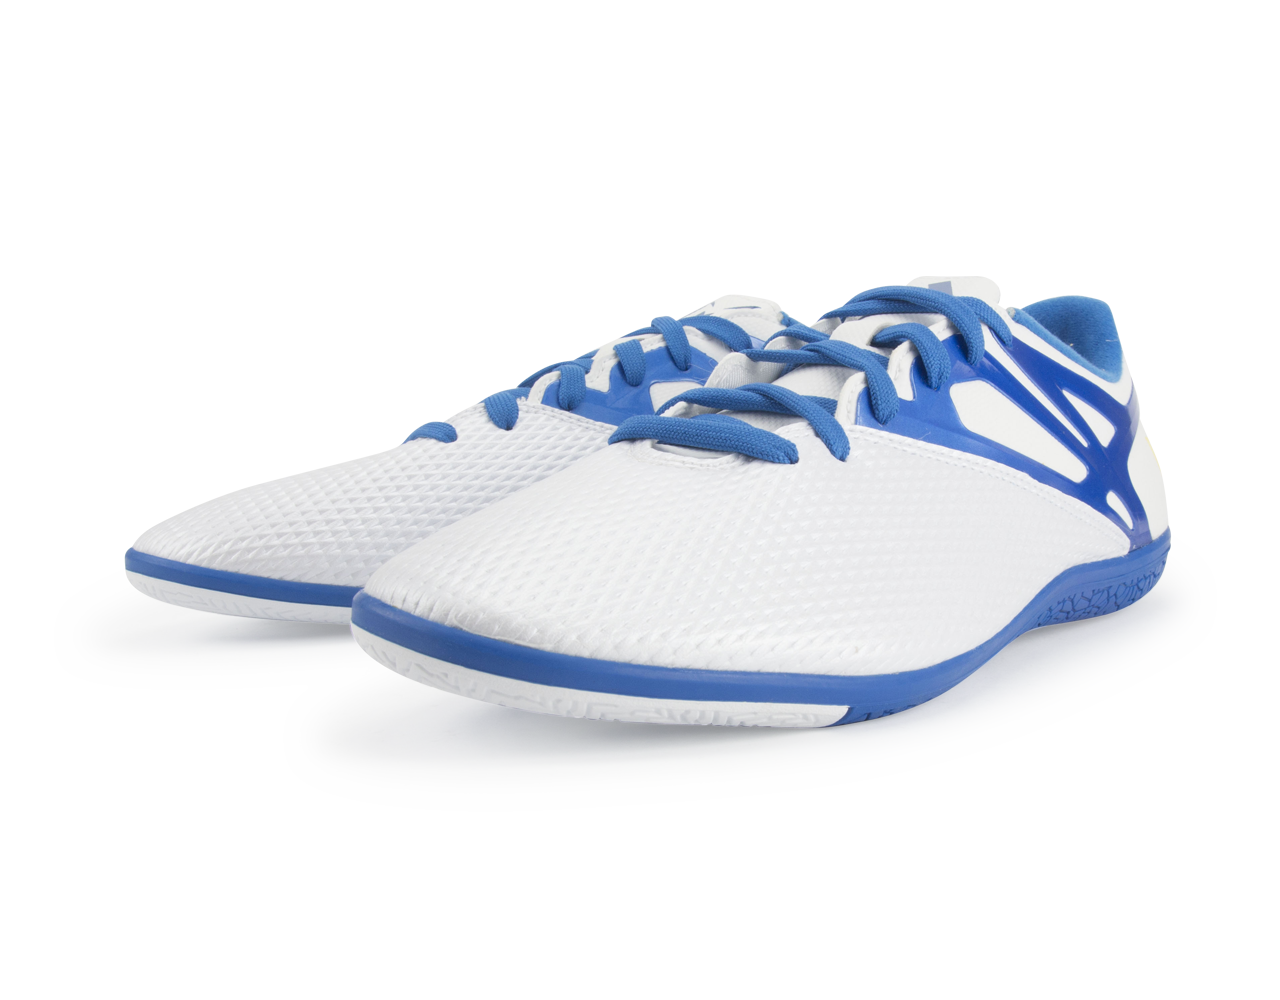 adidas Men's Messi 15.3 Indoor Soccer Shoes White/Prime Blue/Black